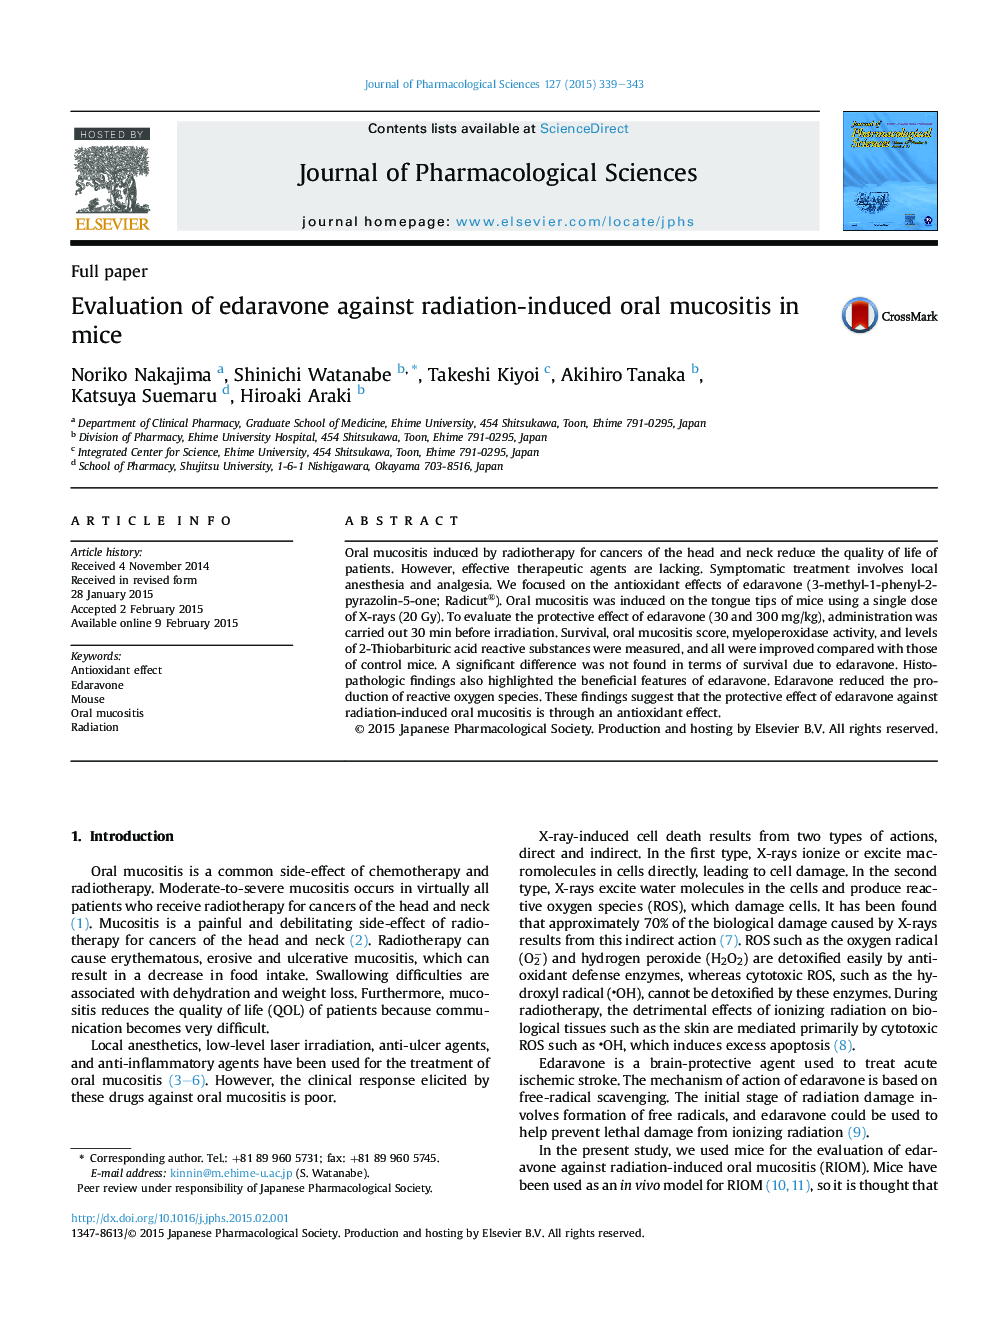 Evaluation of edaravone against radiation-induced oral mucositis in mice 